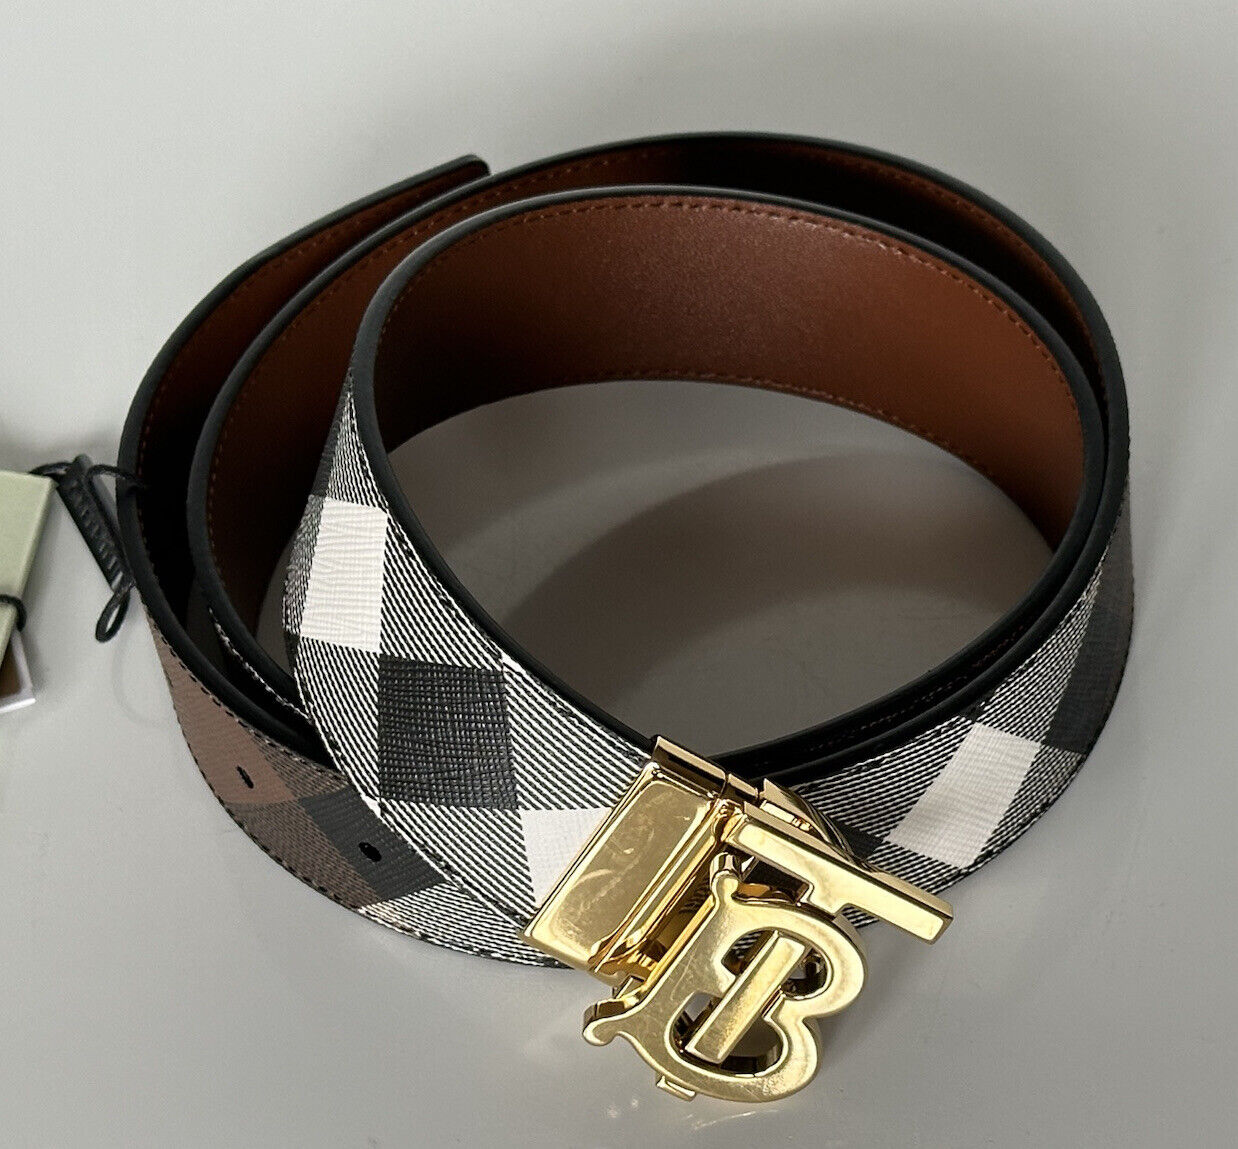 Burberry TB Leather Dark Birch Reversible Belt 38/95 8058348 Italy NWT $550